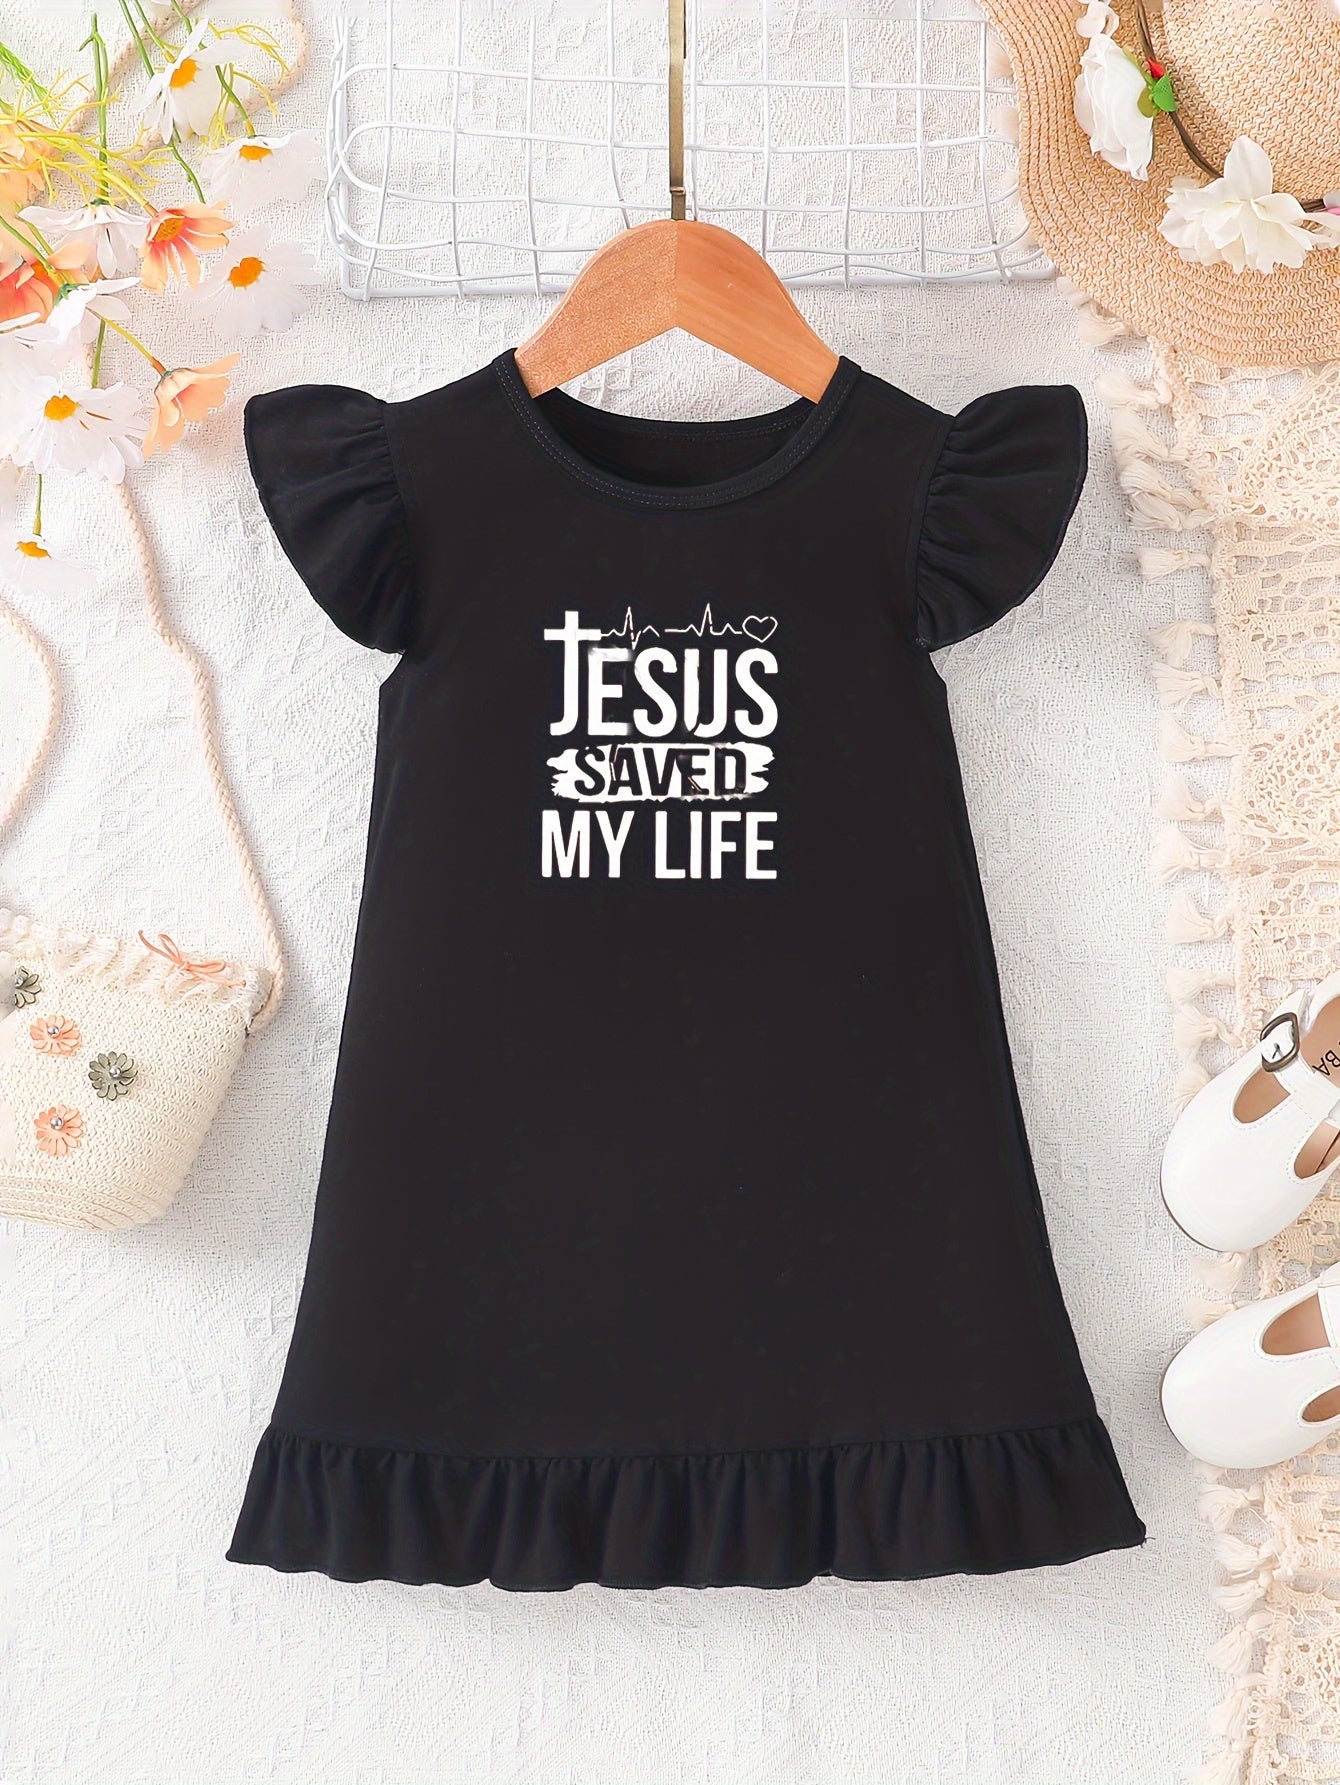 Jesus Saved My Life Christian Toddler Dress claimedbygoddesigns